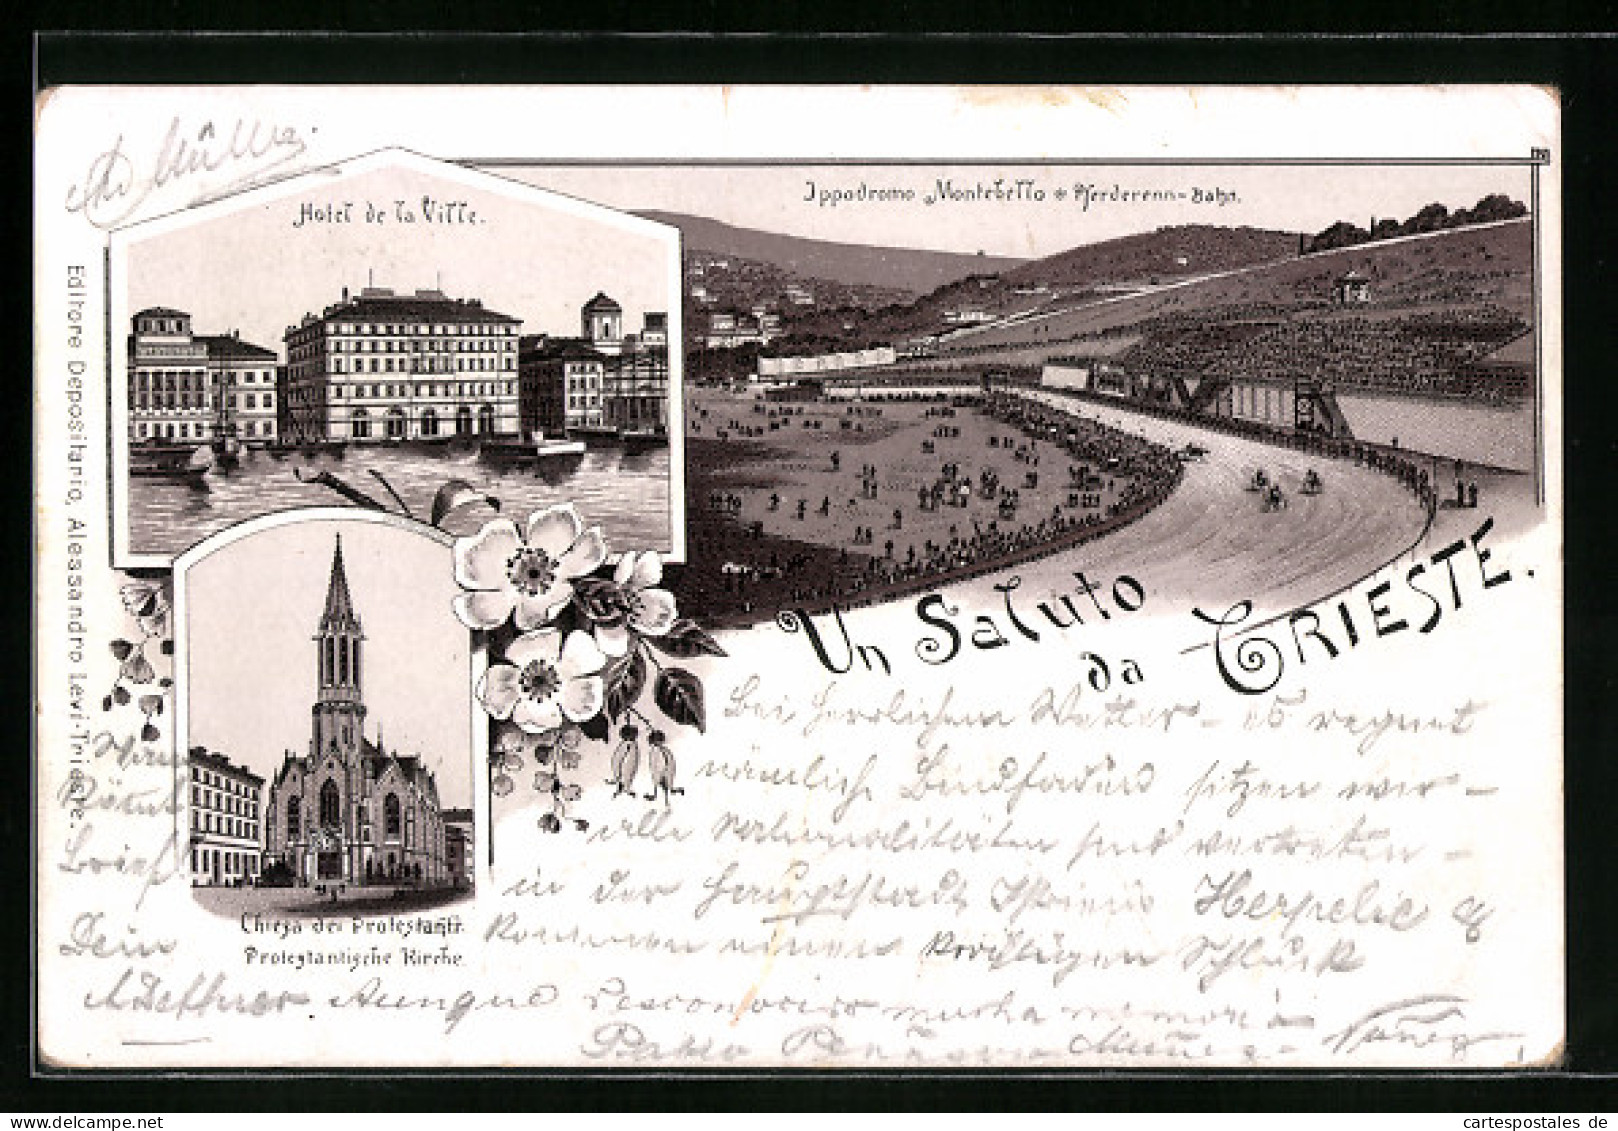 Avanti Di 1895-Lithographie Trieste, Hotel De La Ville, Pferderenn-Bahn, Protestantische Kirche 1895  - Trieste (Triest)